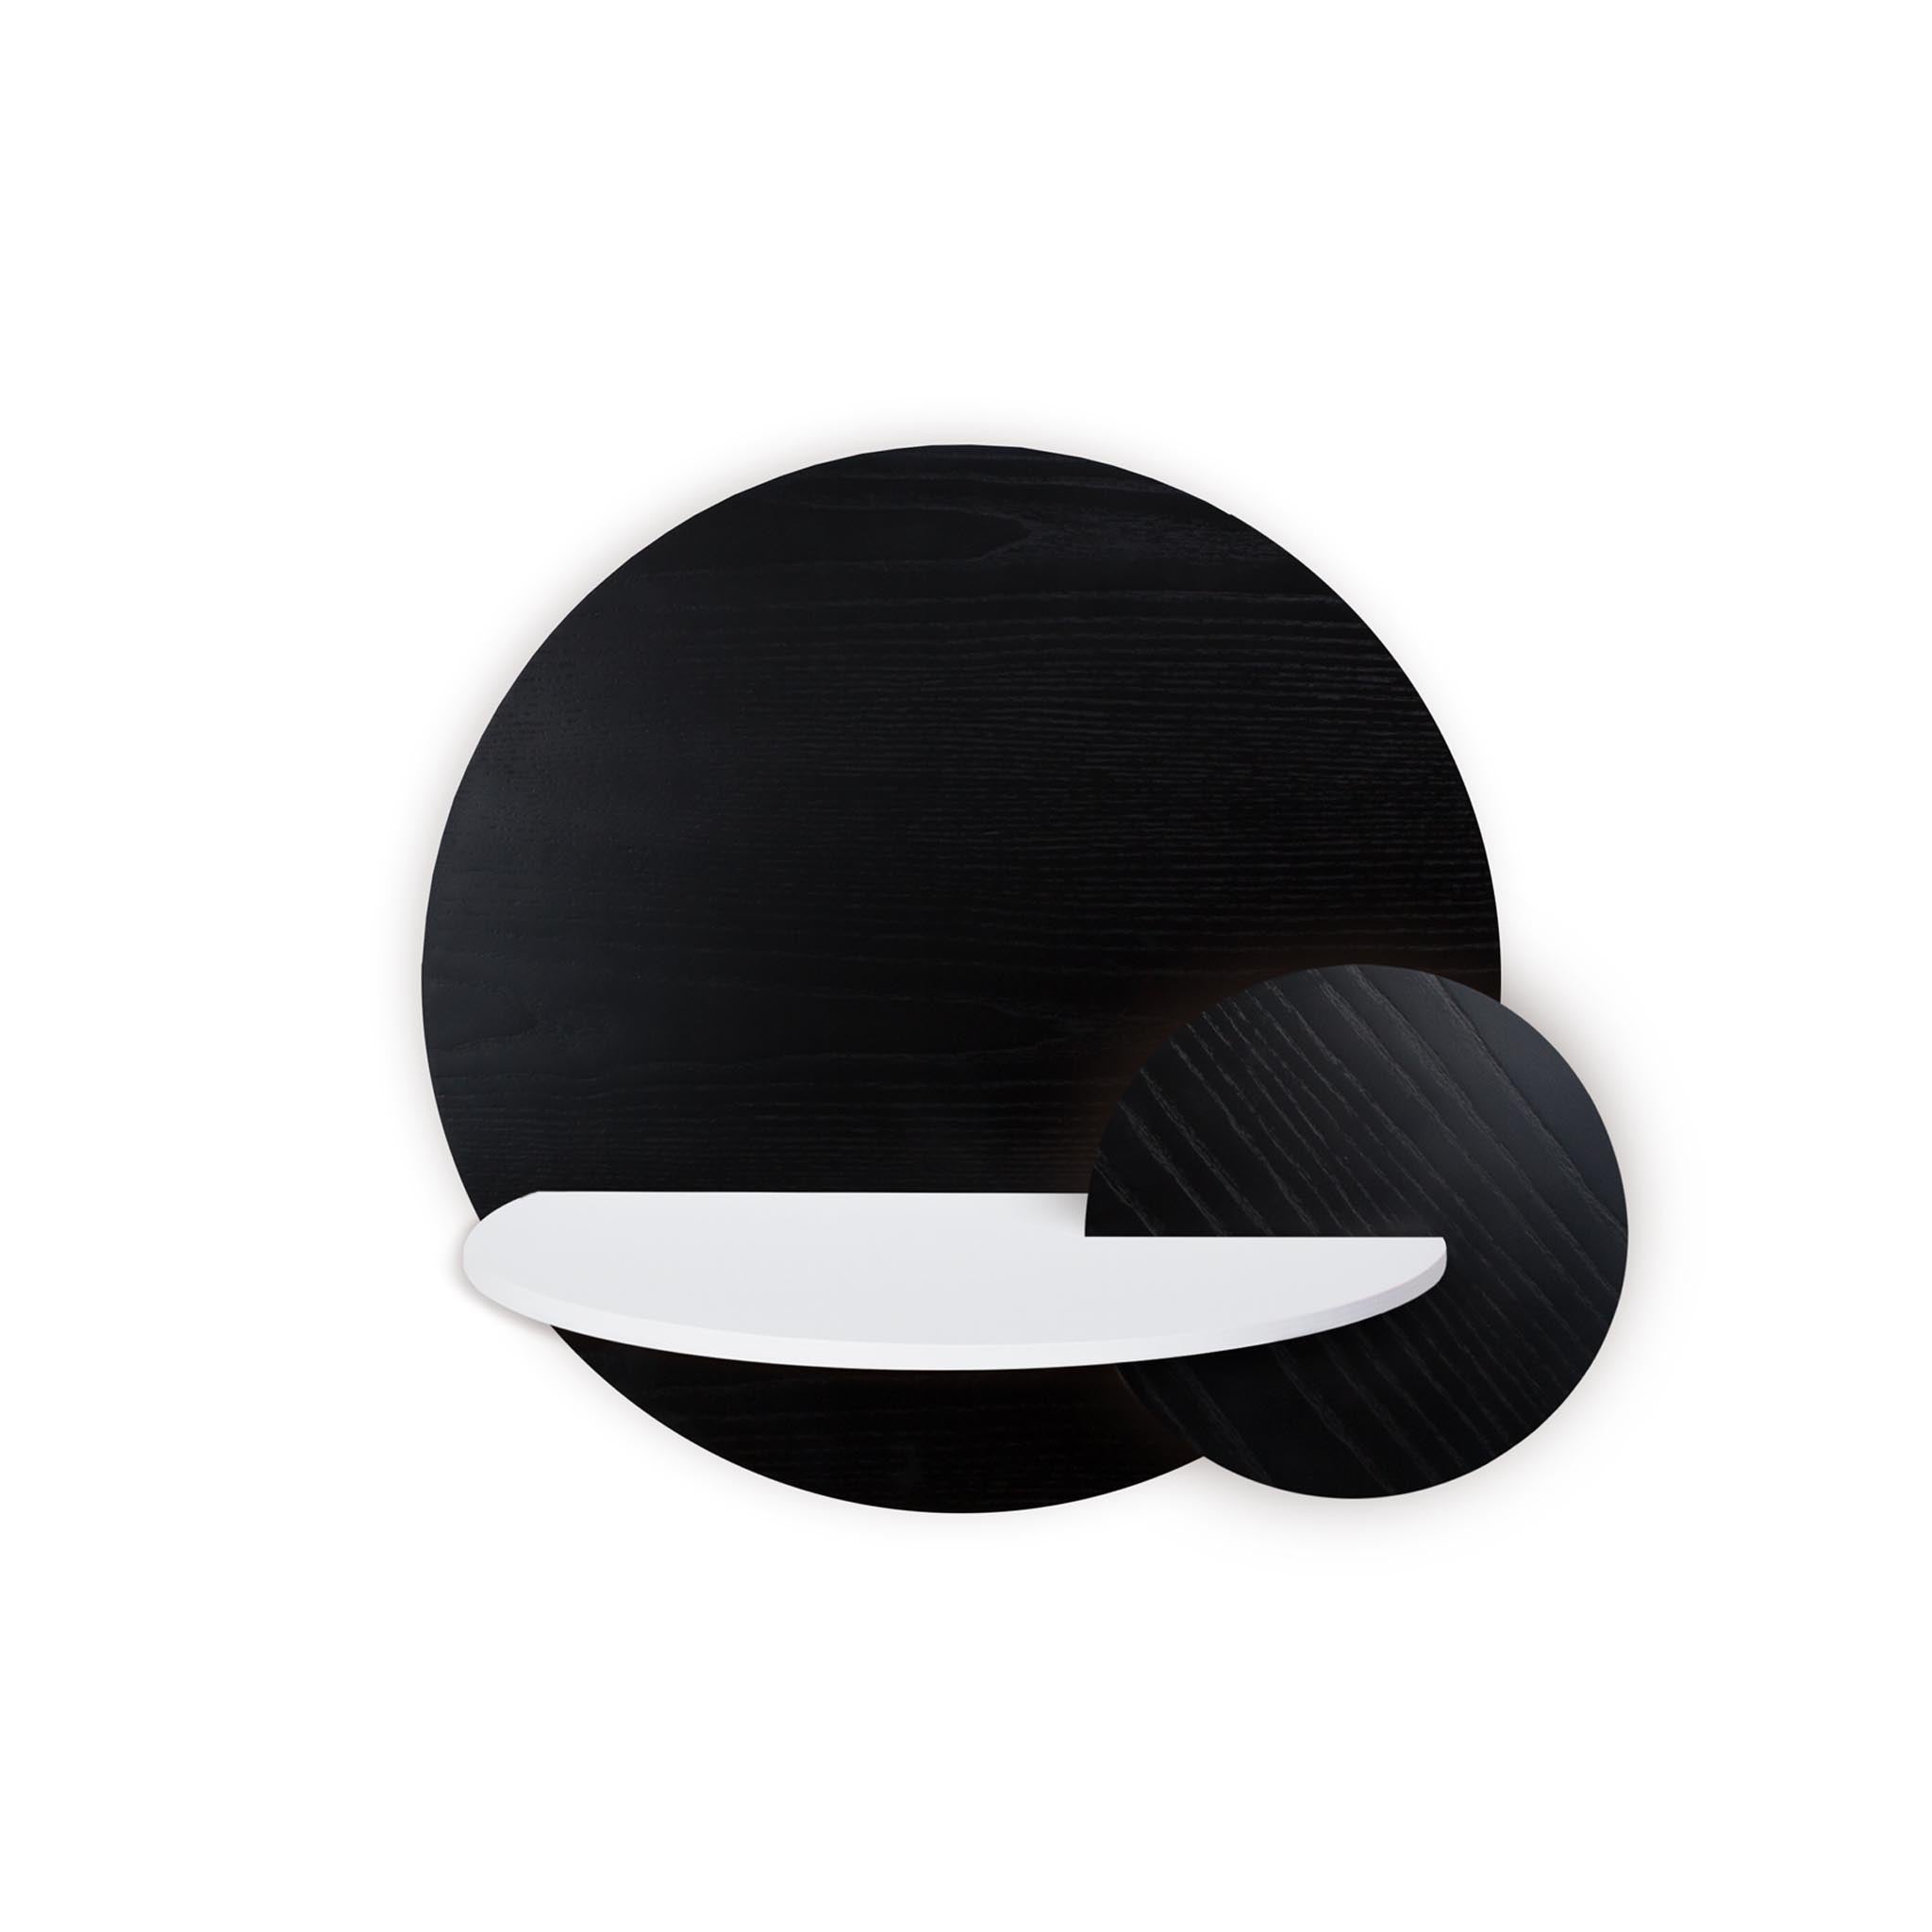 Alba floating nightstand · Black circle